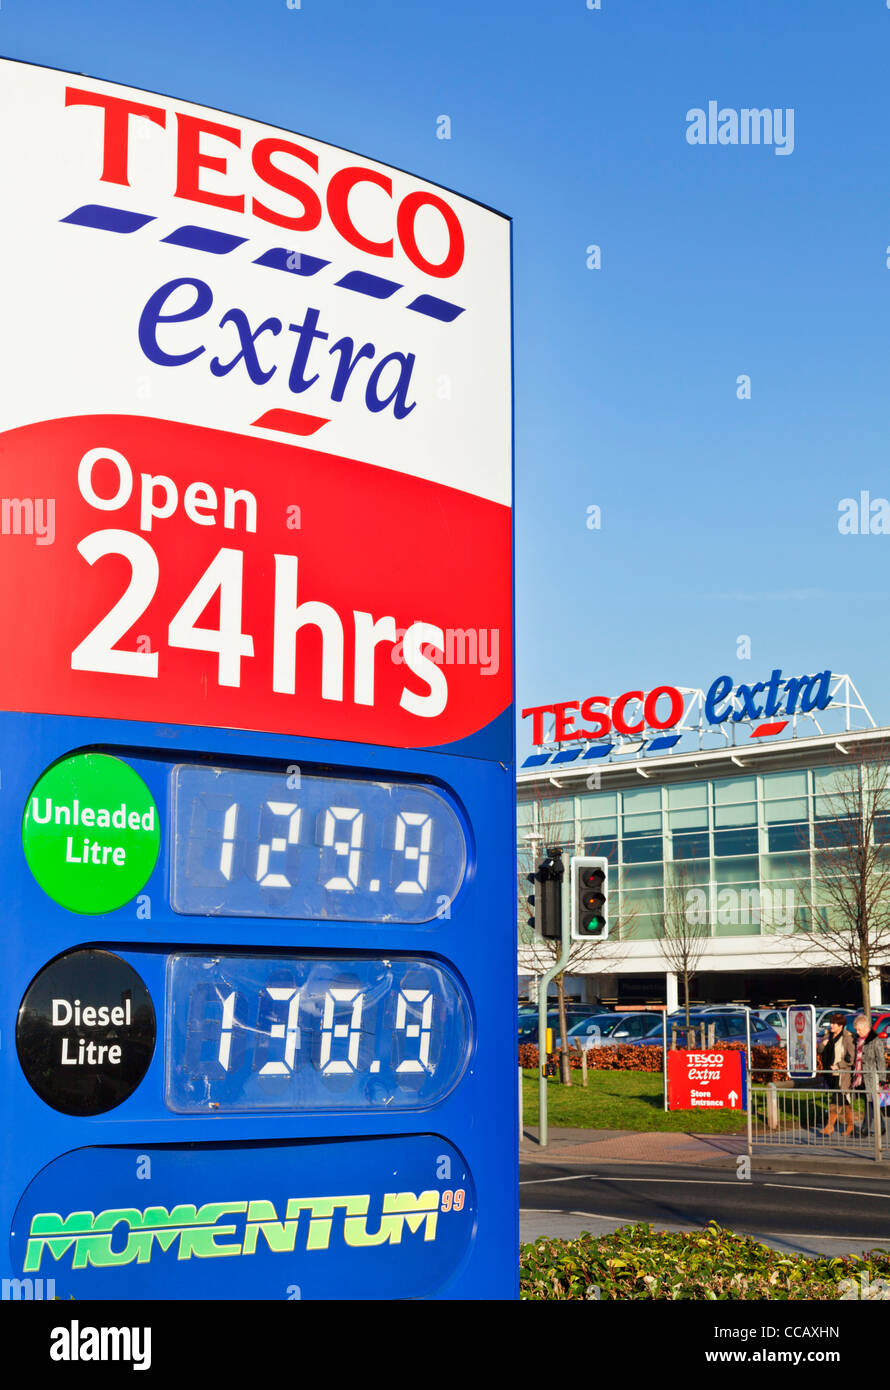 Distributore di benzina uk Tesco extra aperto 24 ore su 24 distributore di benzina segno lungo eaton centro città derbyshire Inghilterra UK GB Europa Foto Stock